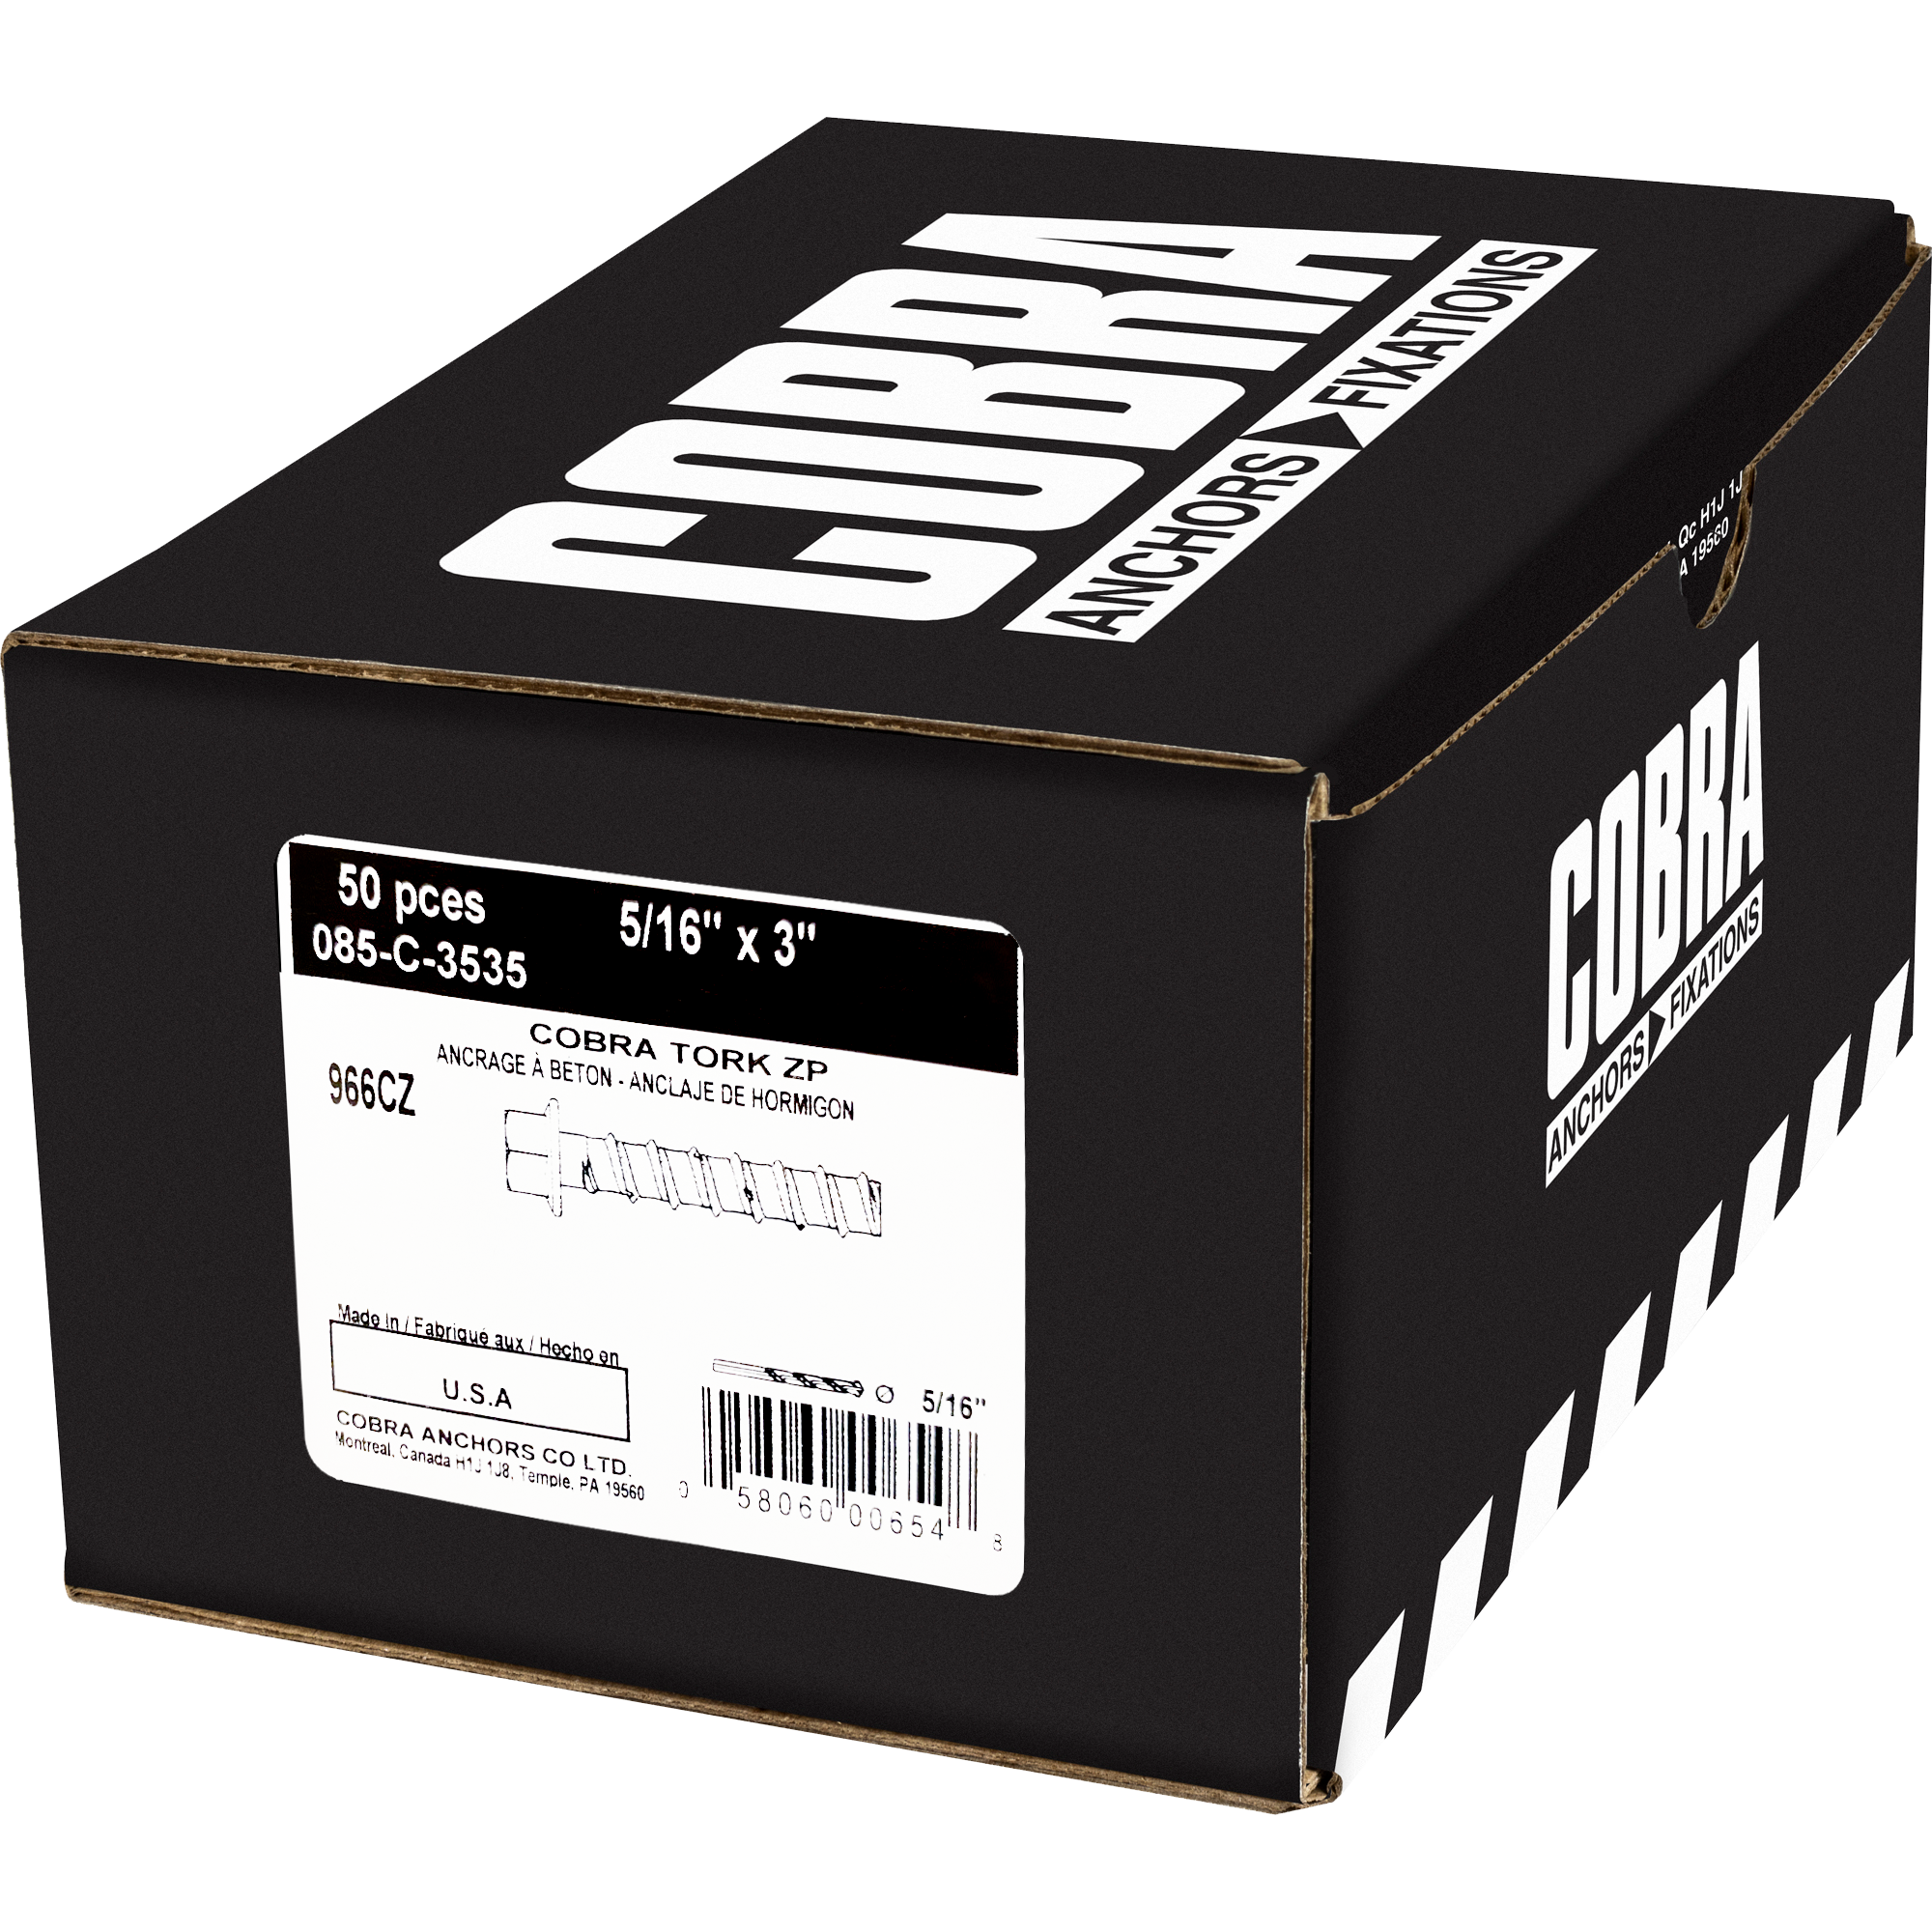 COBRATORK 5/16" X 3" ZINC PLATED BOXED (X50)